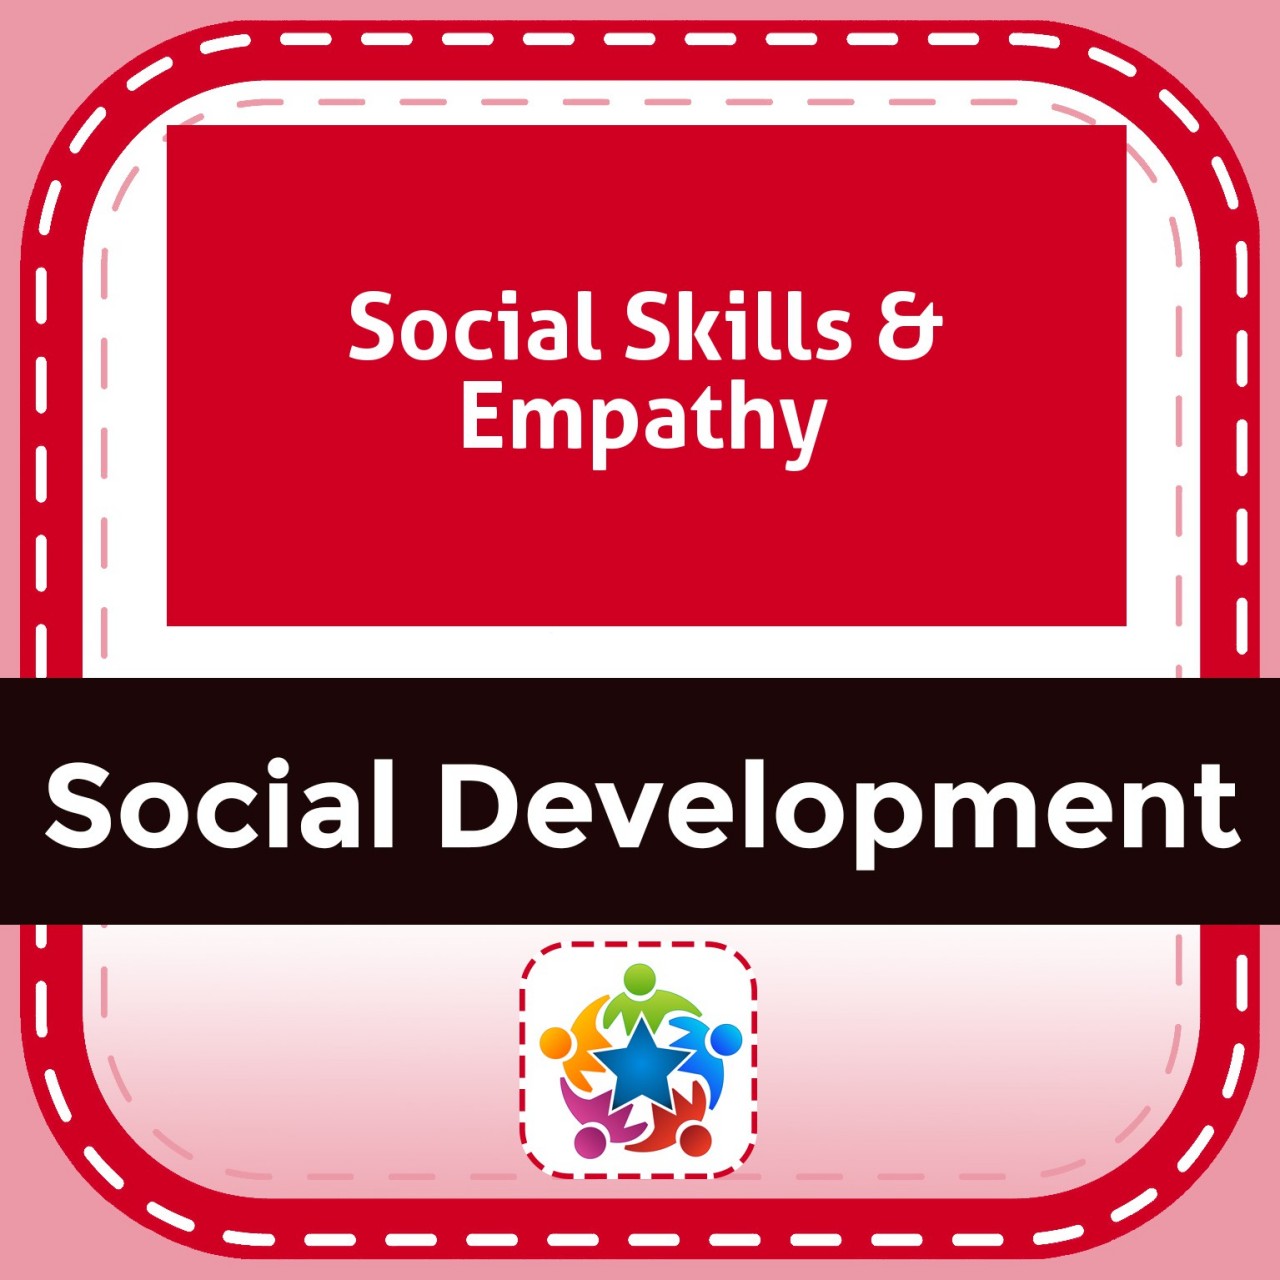 Social Skills & Empathy